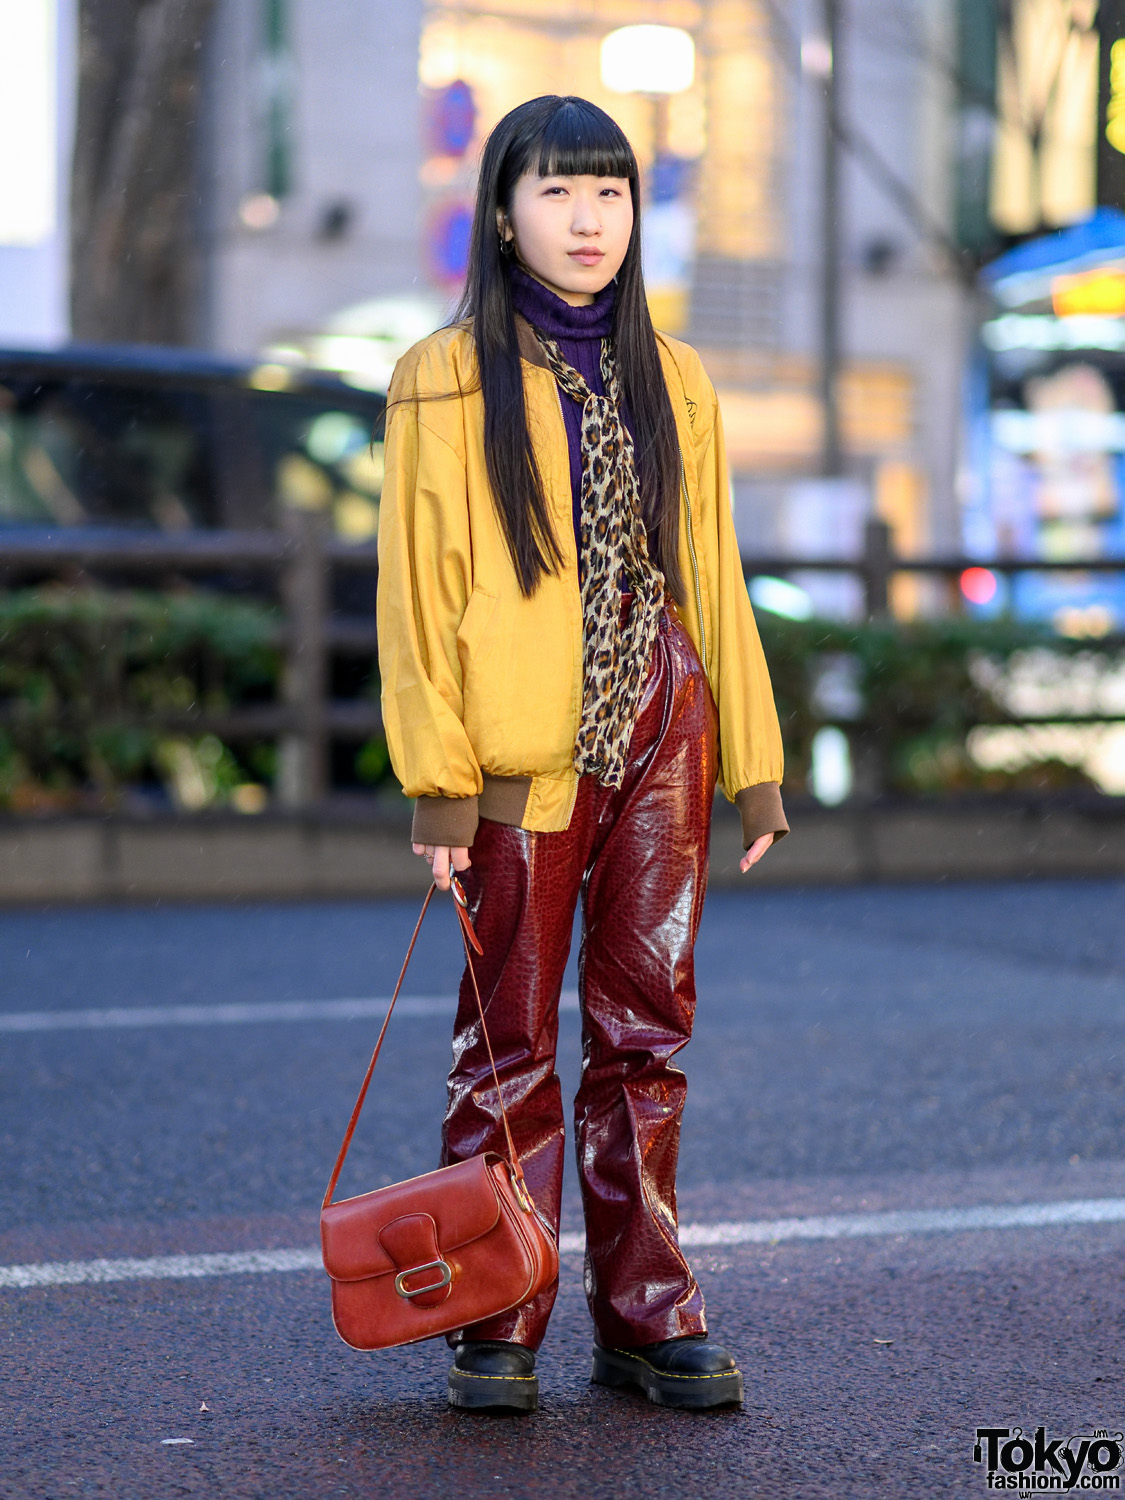 Kansai Yamamoto Sports Bomber Jacket, Leopard Print Scarf, Vintage Snakeskin Pants, Dr. Martens Boots & Vintage Handbag in Harajuku